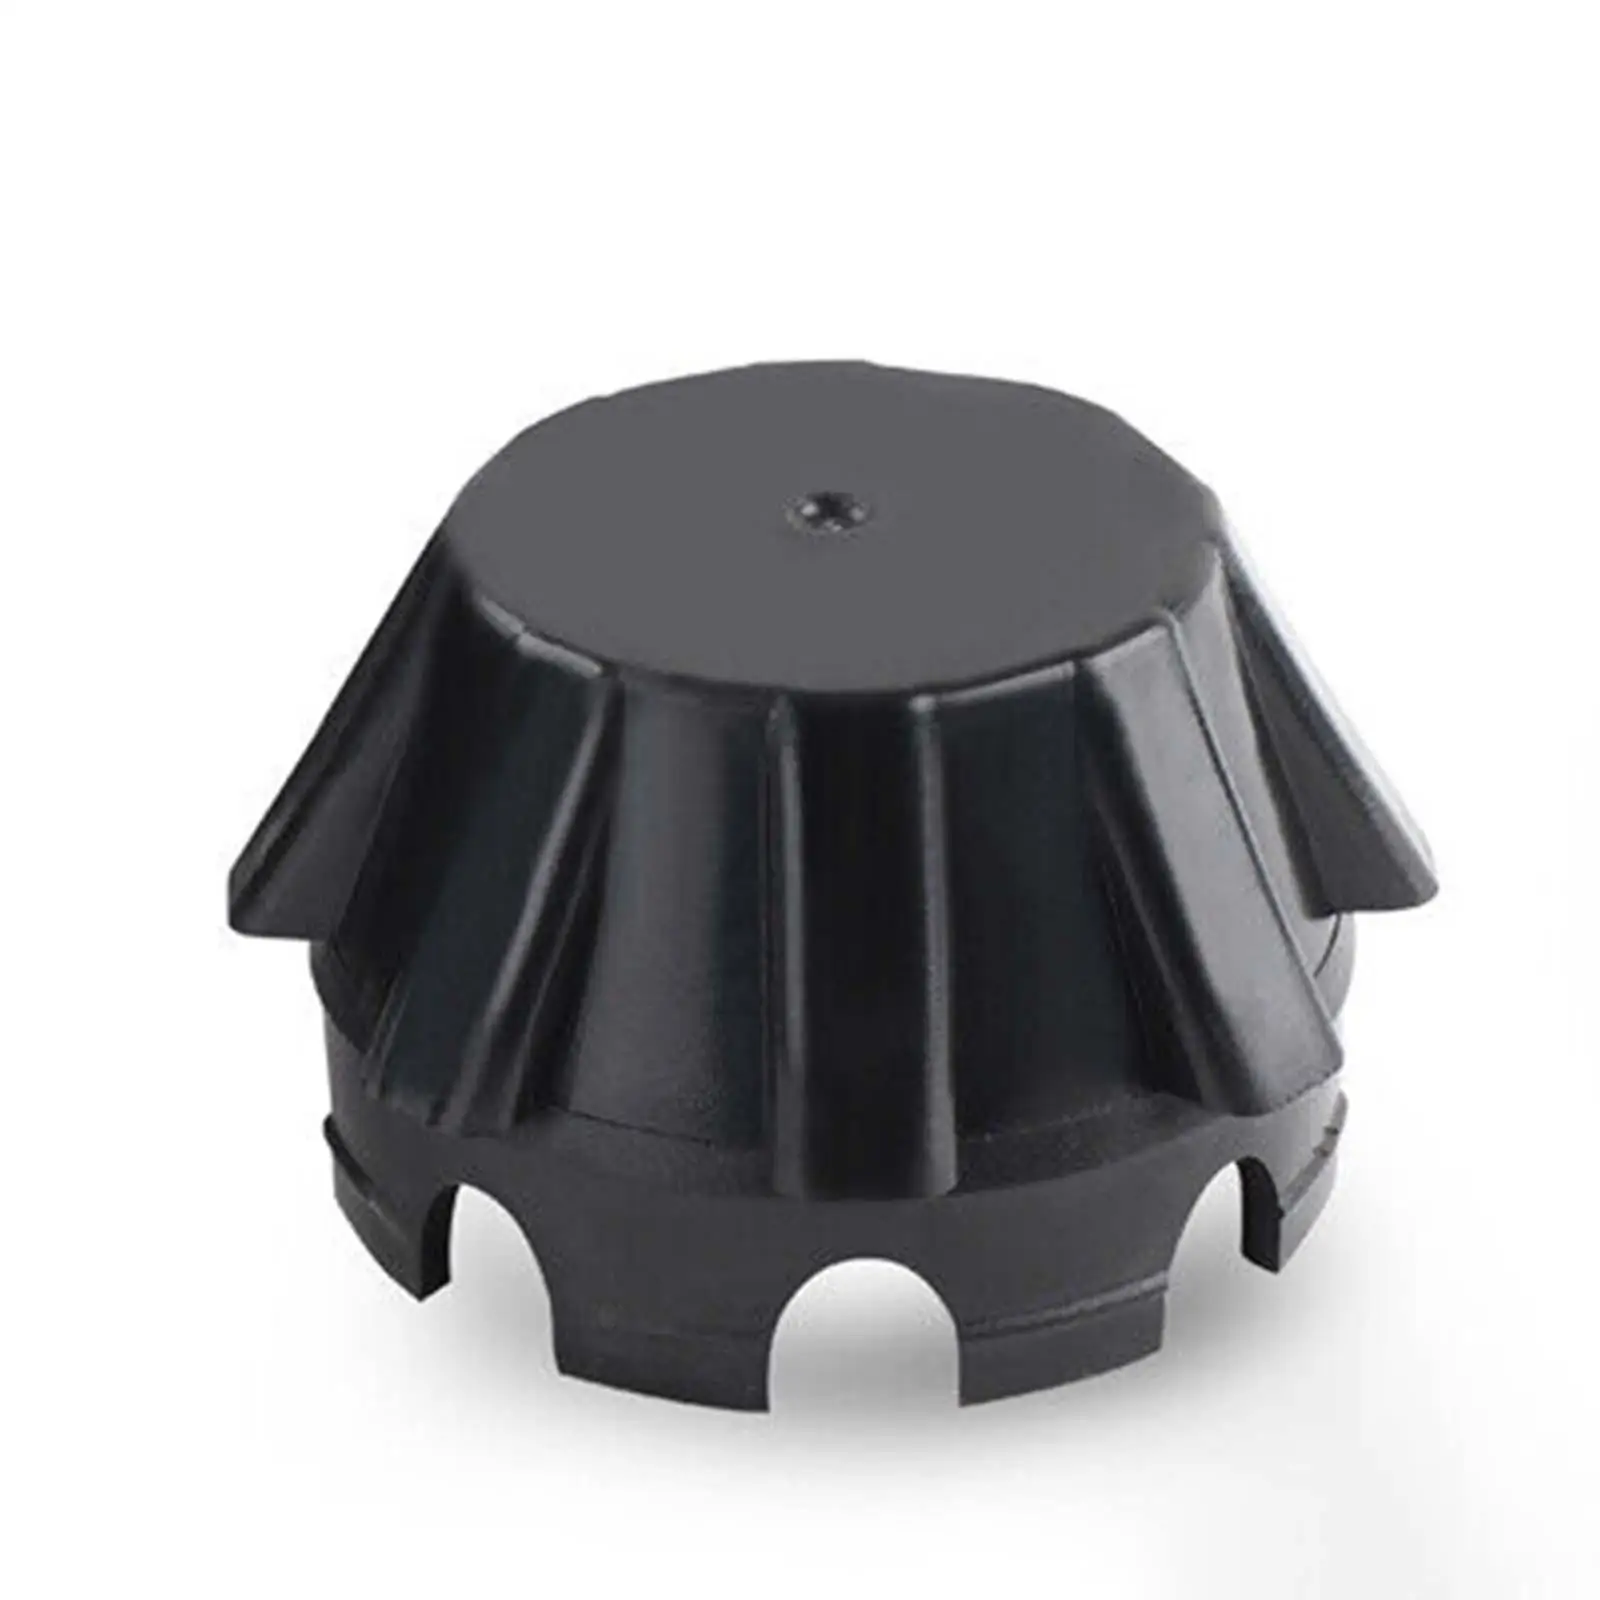 4Pcs Wheel Center Hub Caps Accessory for Kawasaki Krx 1000 Stable Performance Premium Quality Easy Installation